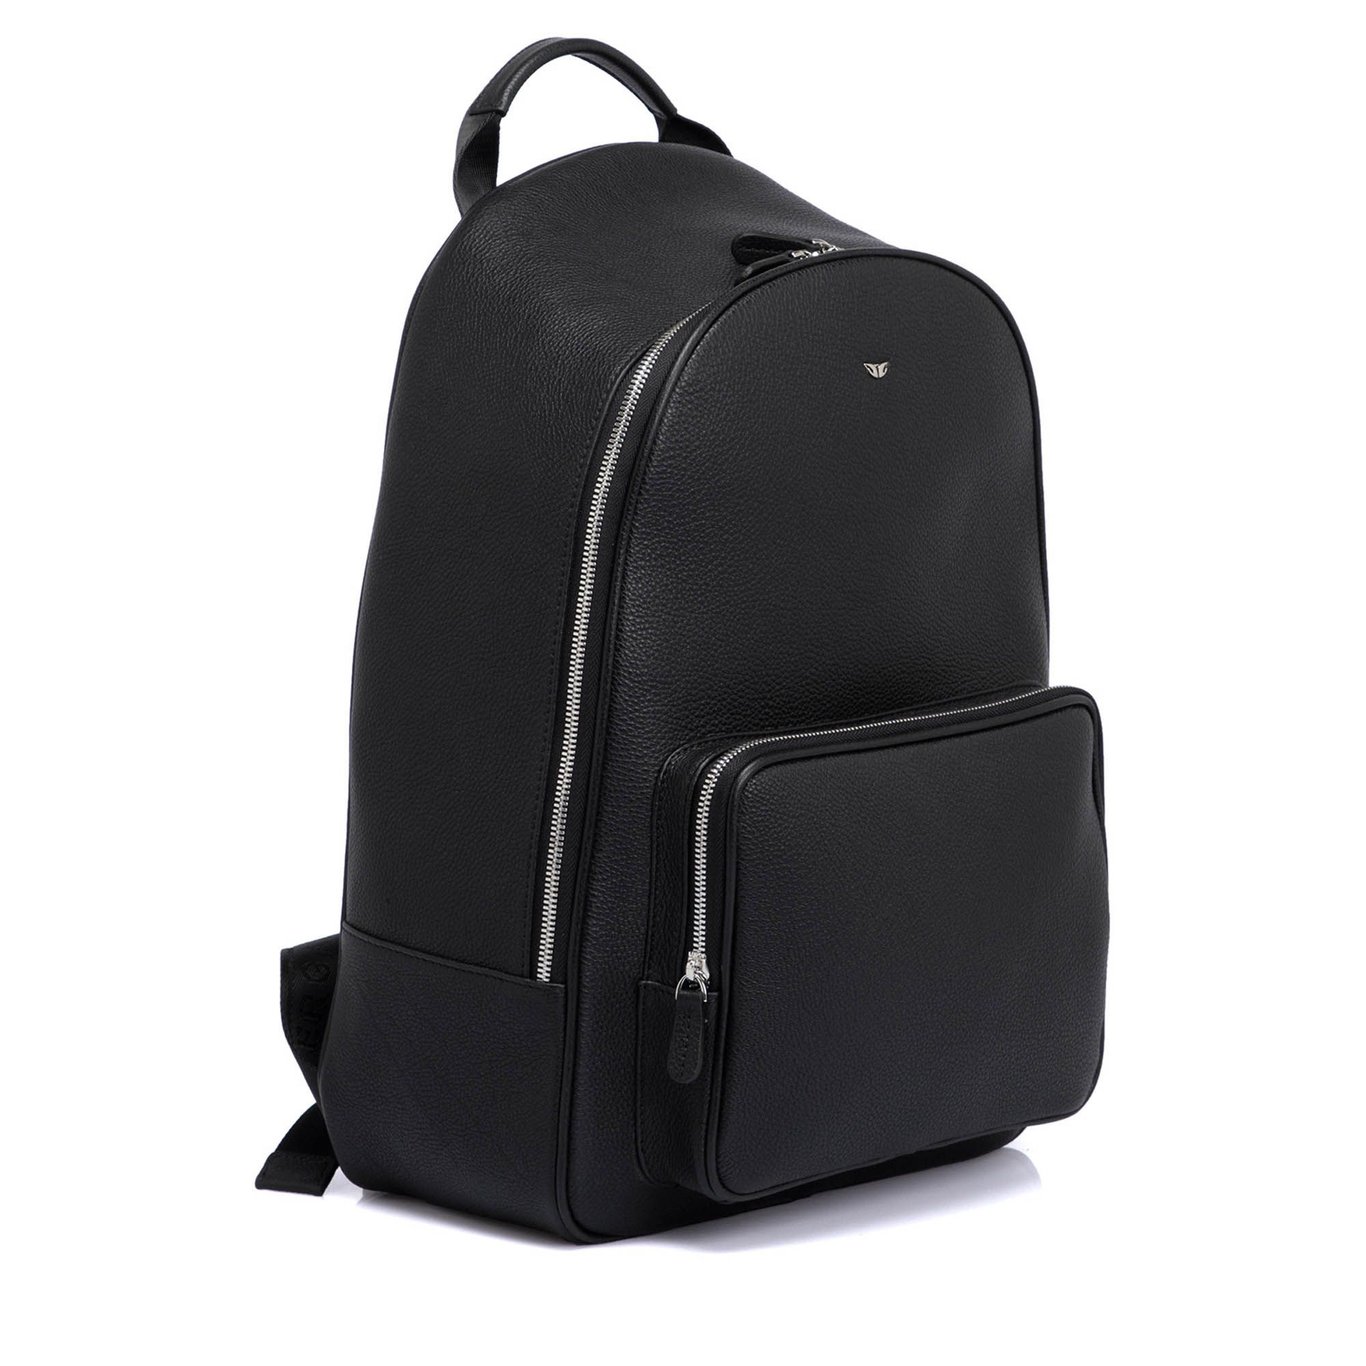 Tergan Leather Backpack Bag